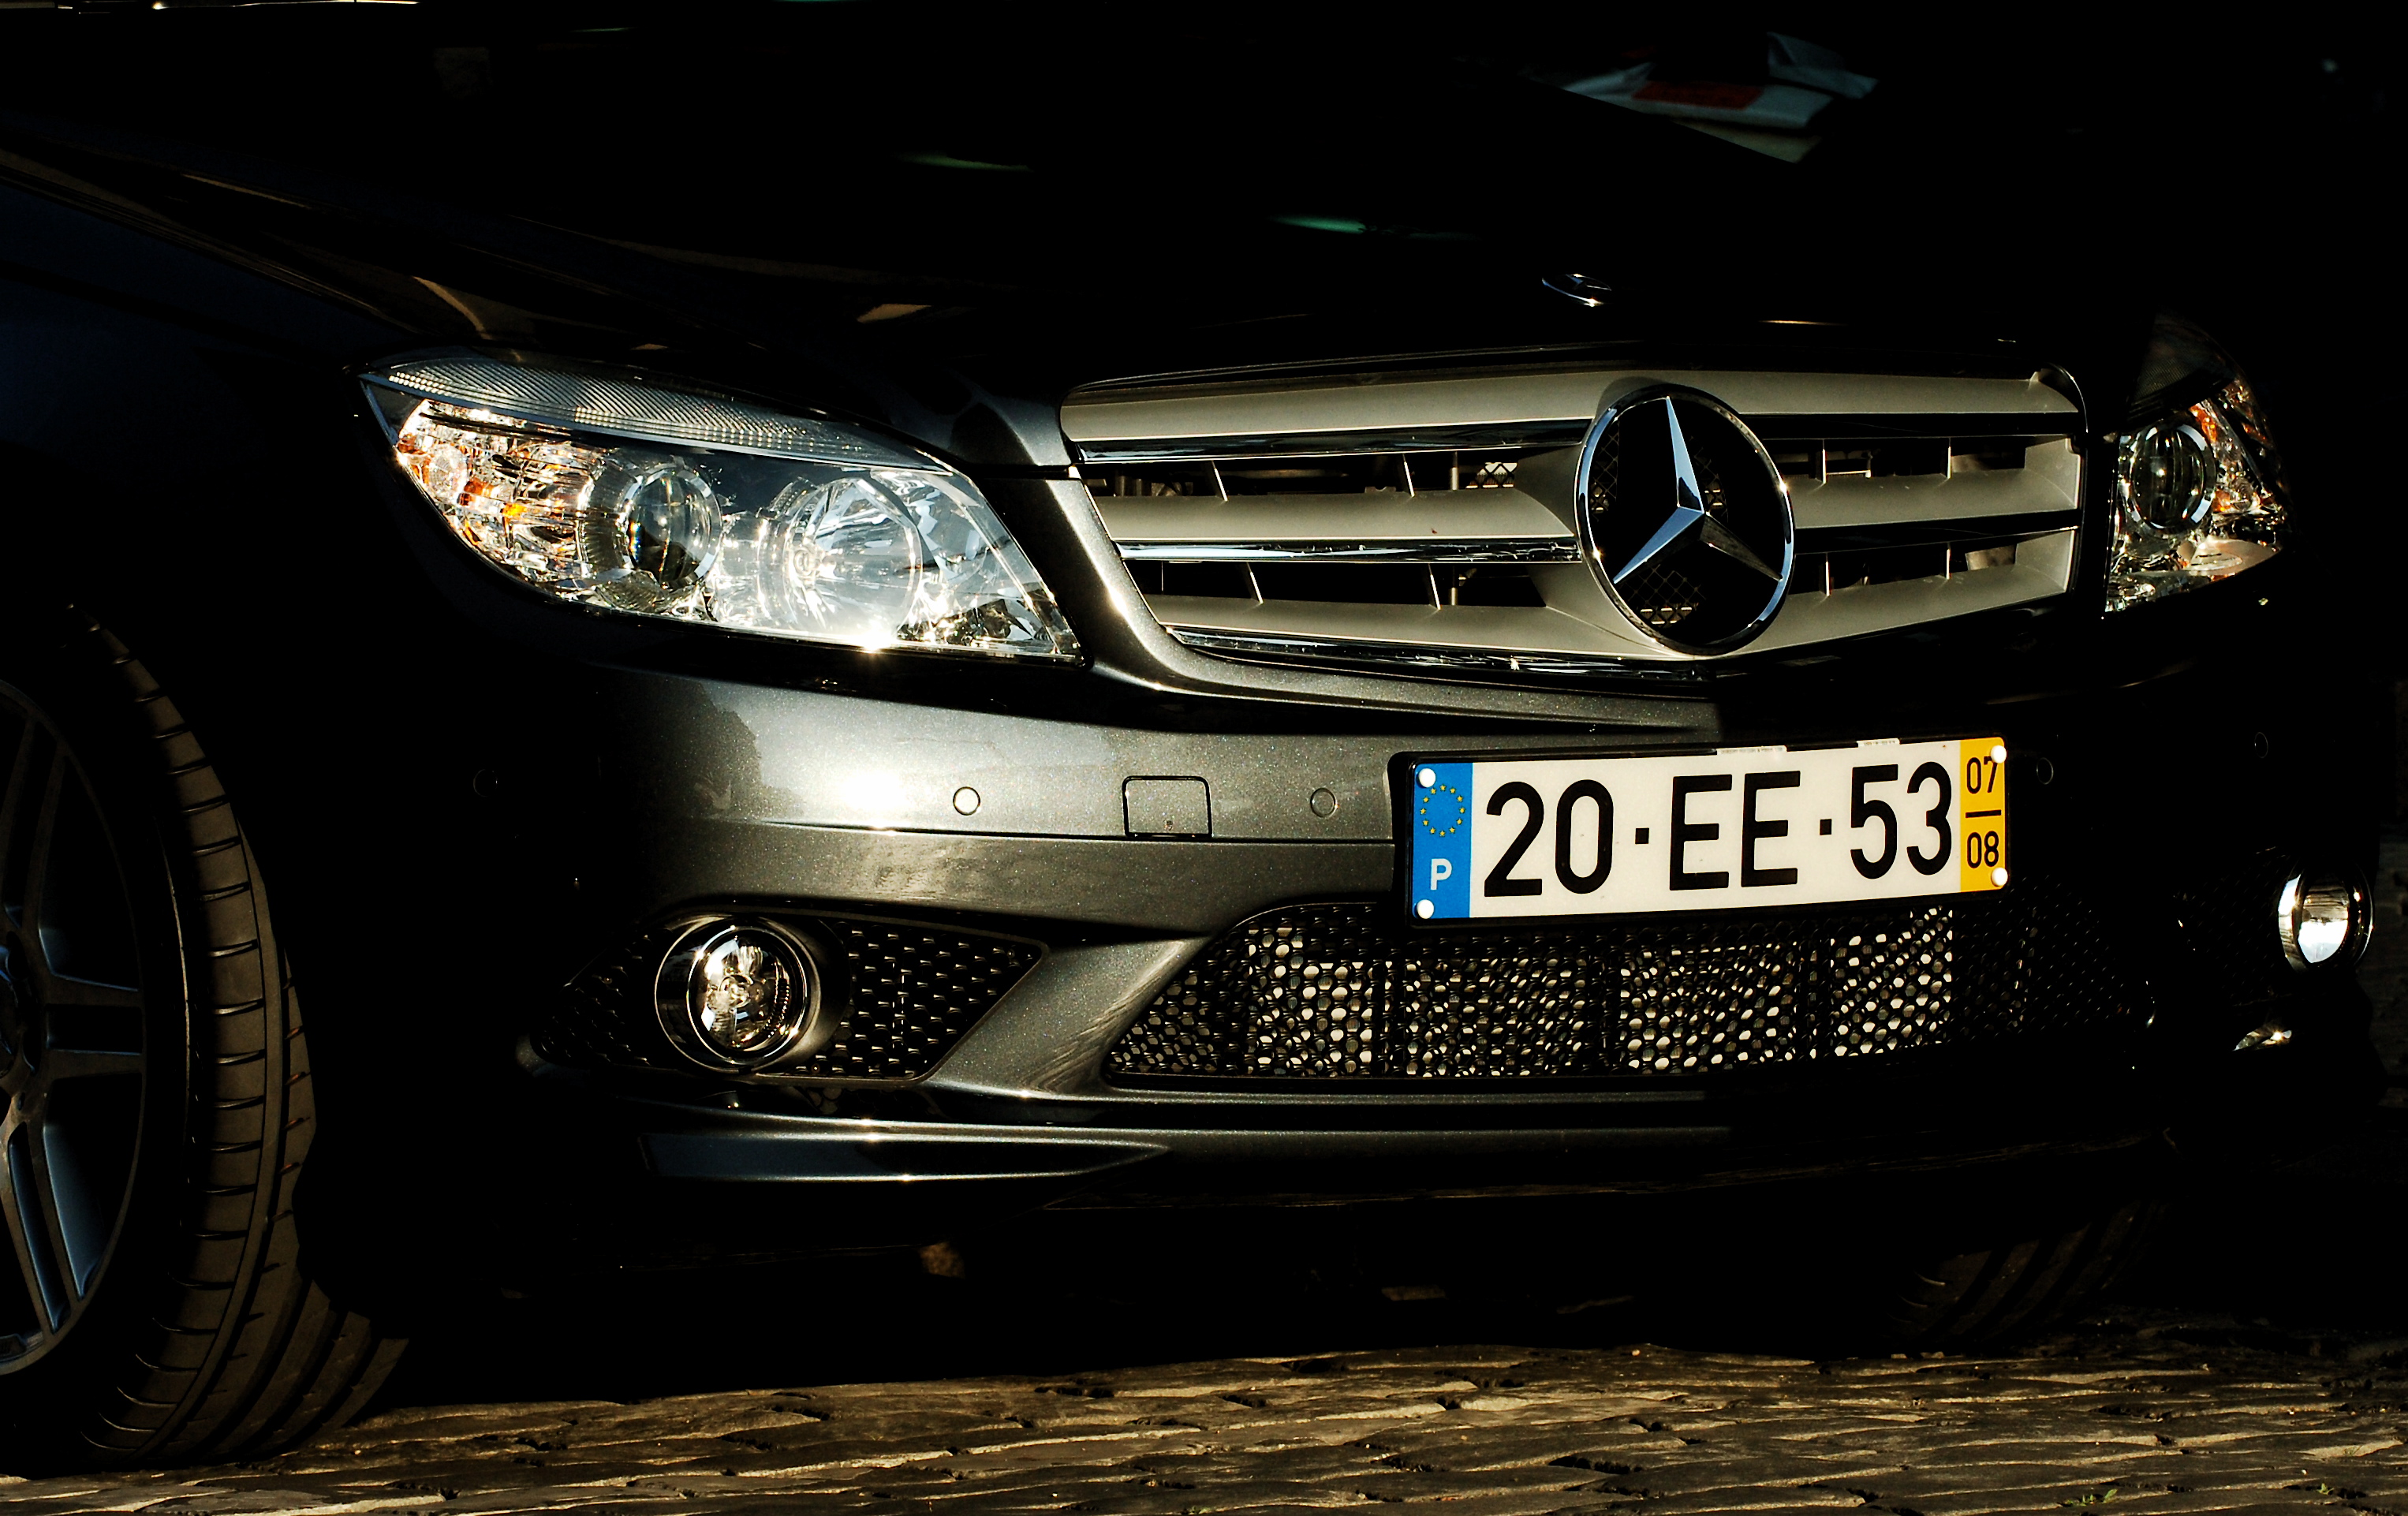 Mercedesbenz W204 Cclass Stock Photo - Download Image Now